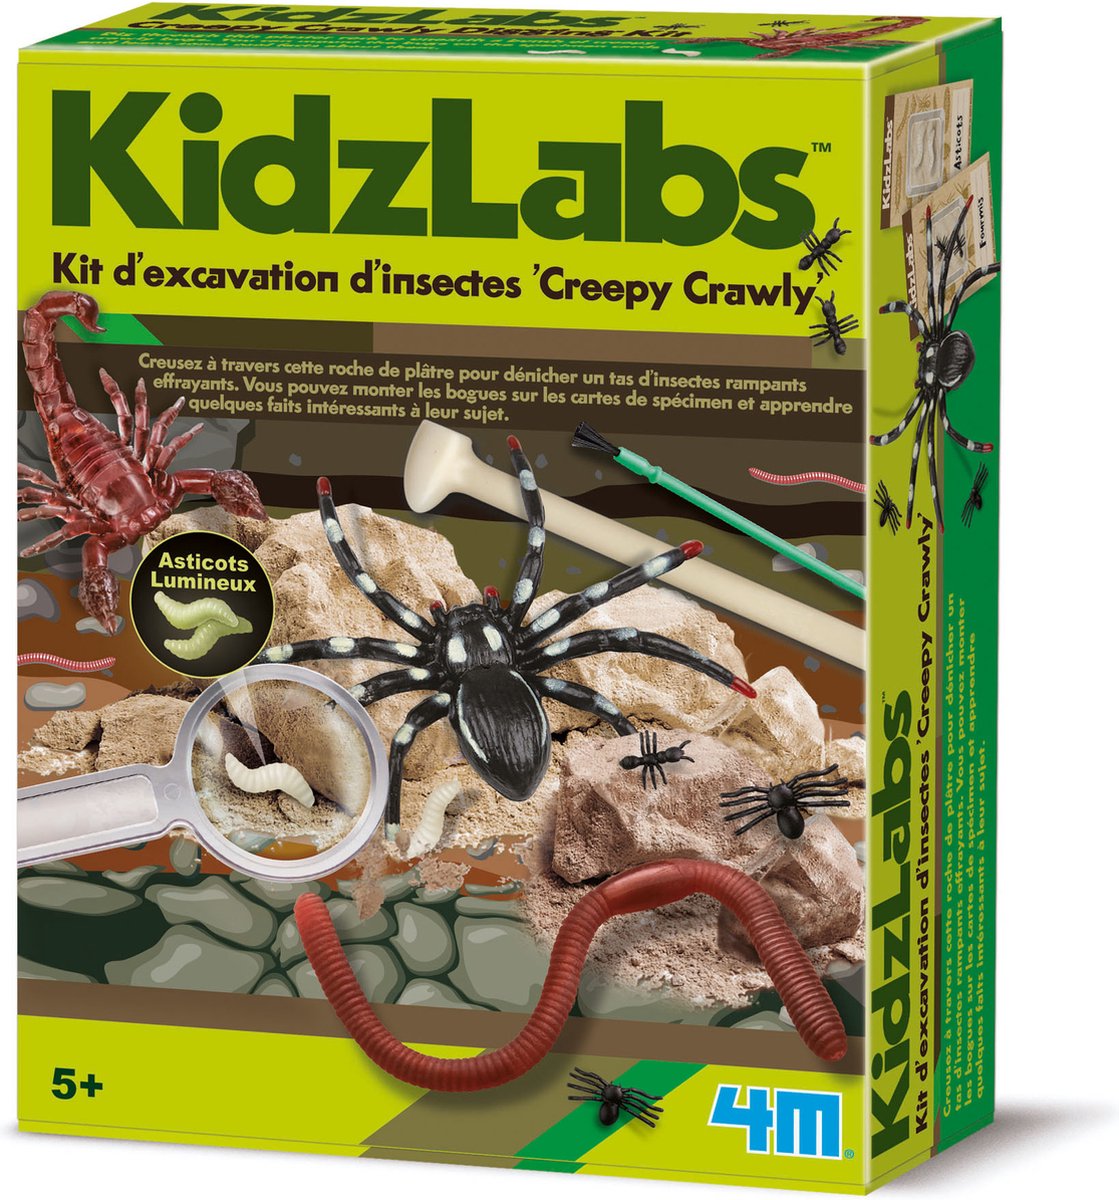 4M Kidzlabs: OPGRAAFKIT INSECTEN CREEPY CRAWLY / F R A N S T A L I G E VERPAKKING, in doos 17x22x6cm, 5+